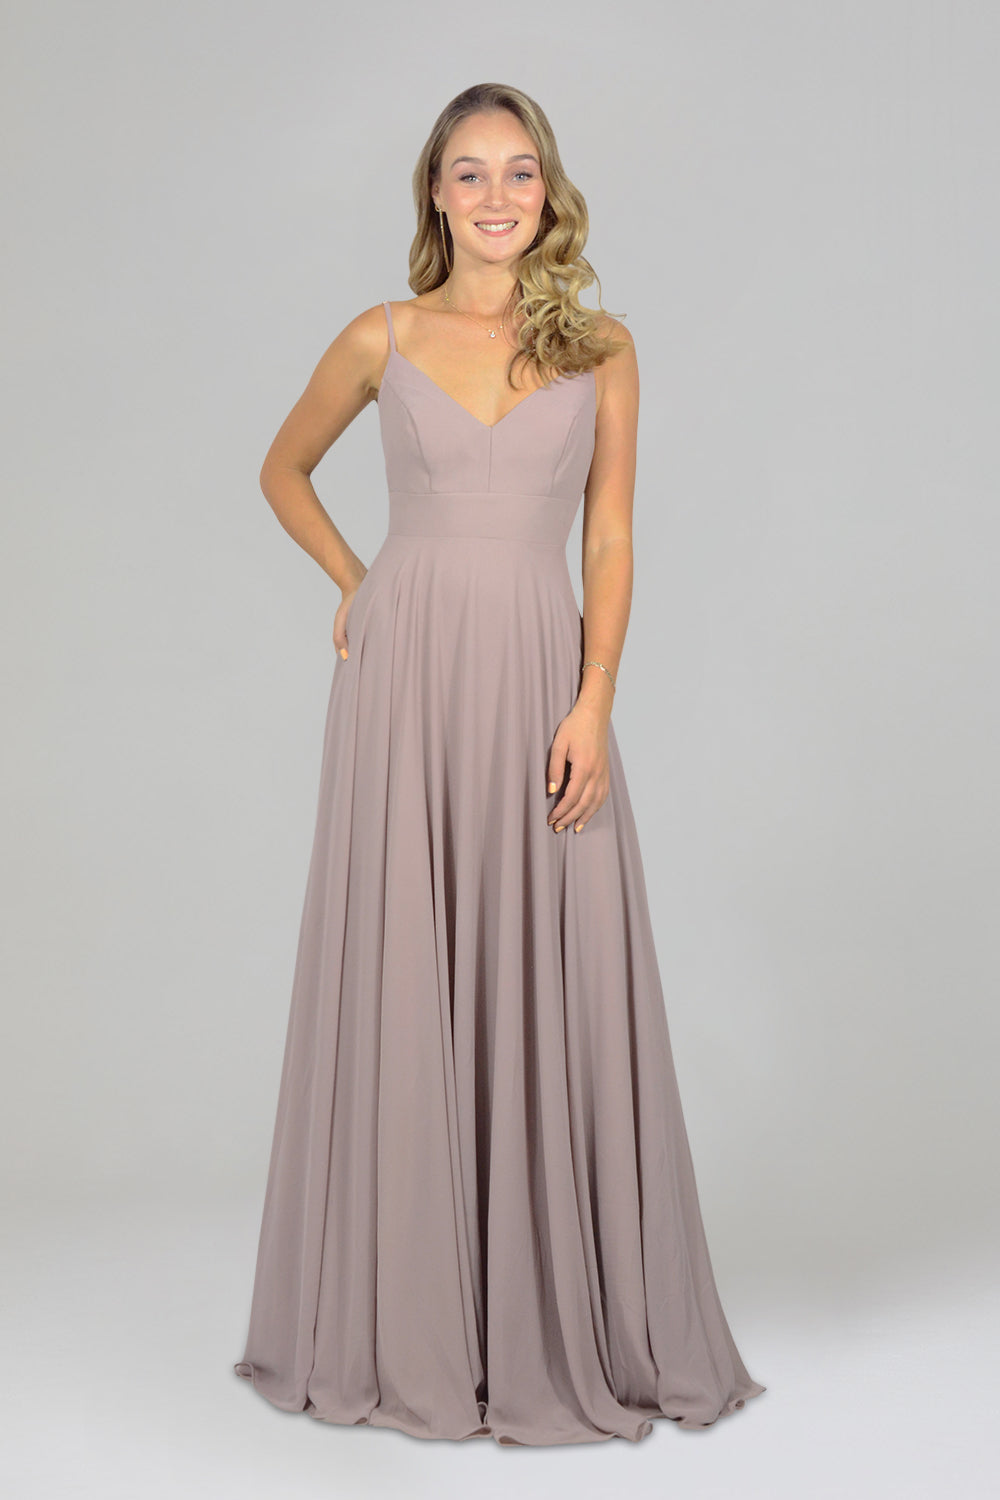 nude colour bridesmaid dresses perth australia online envious bridal & formal